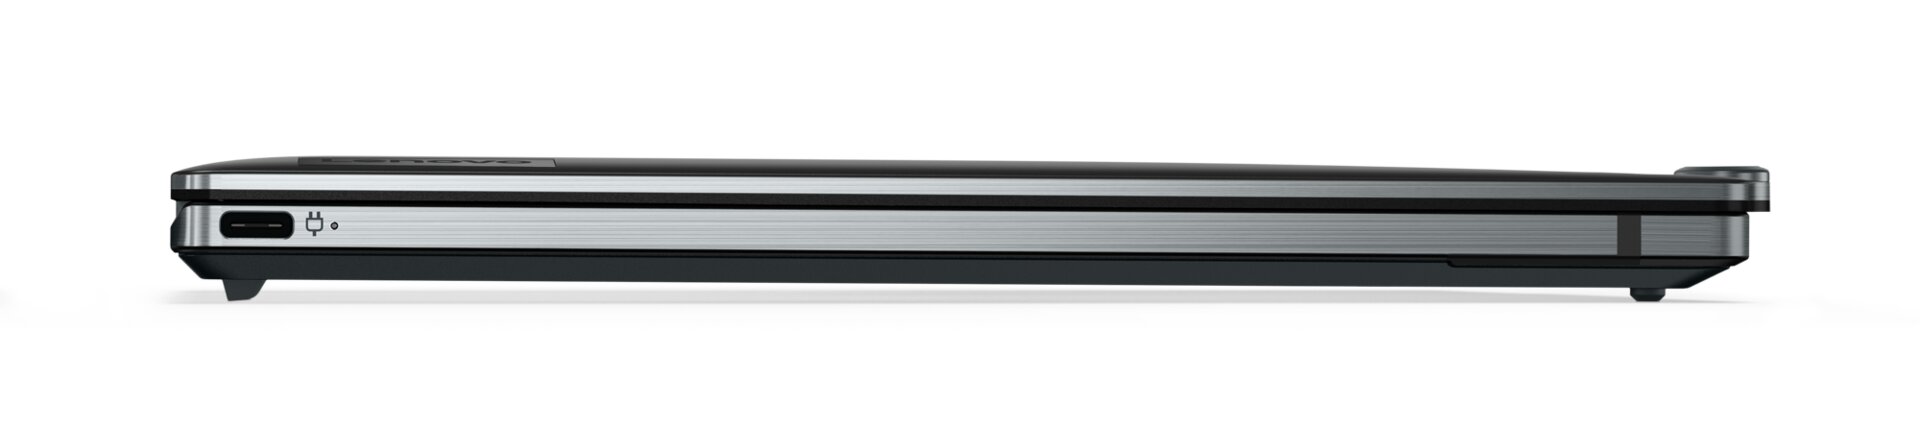 ThinkPad Z13 (Black)